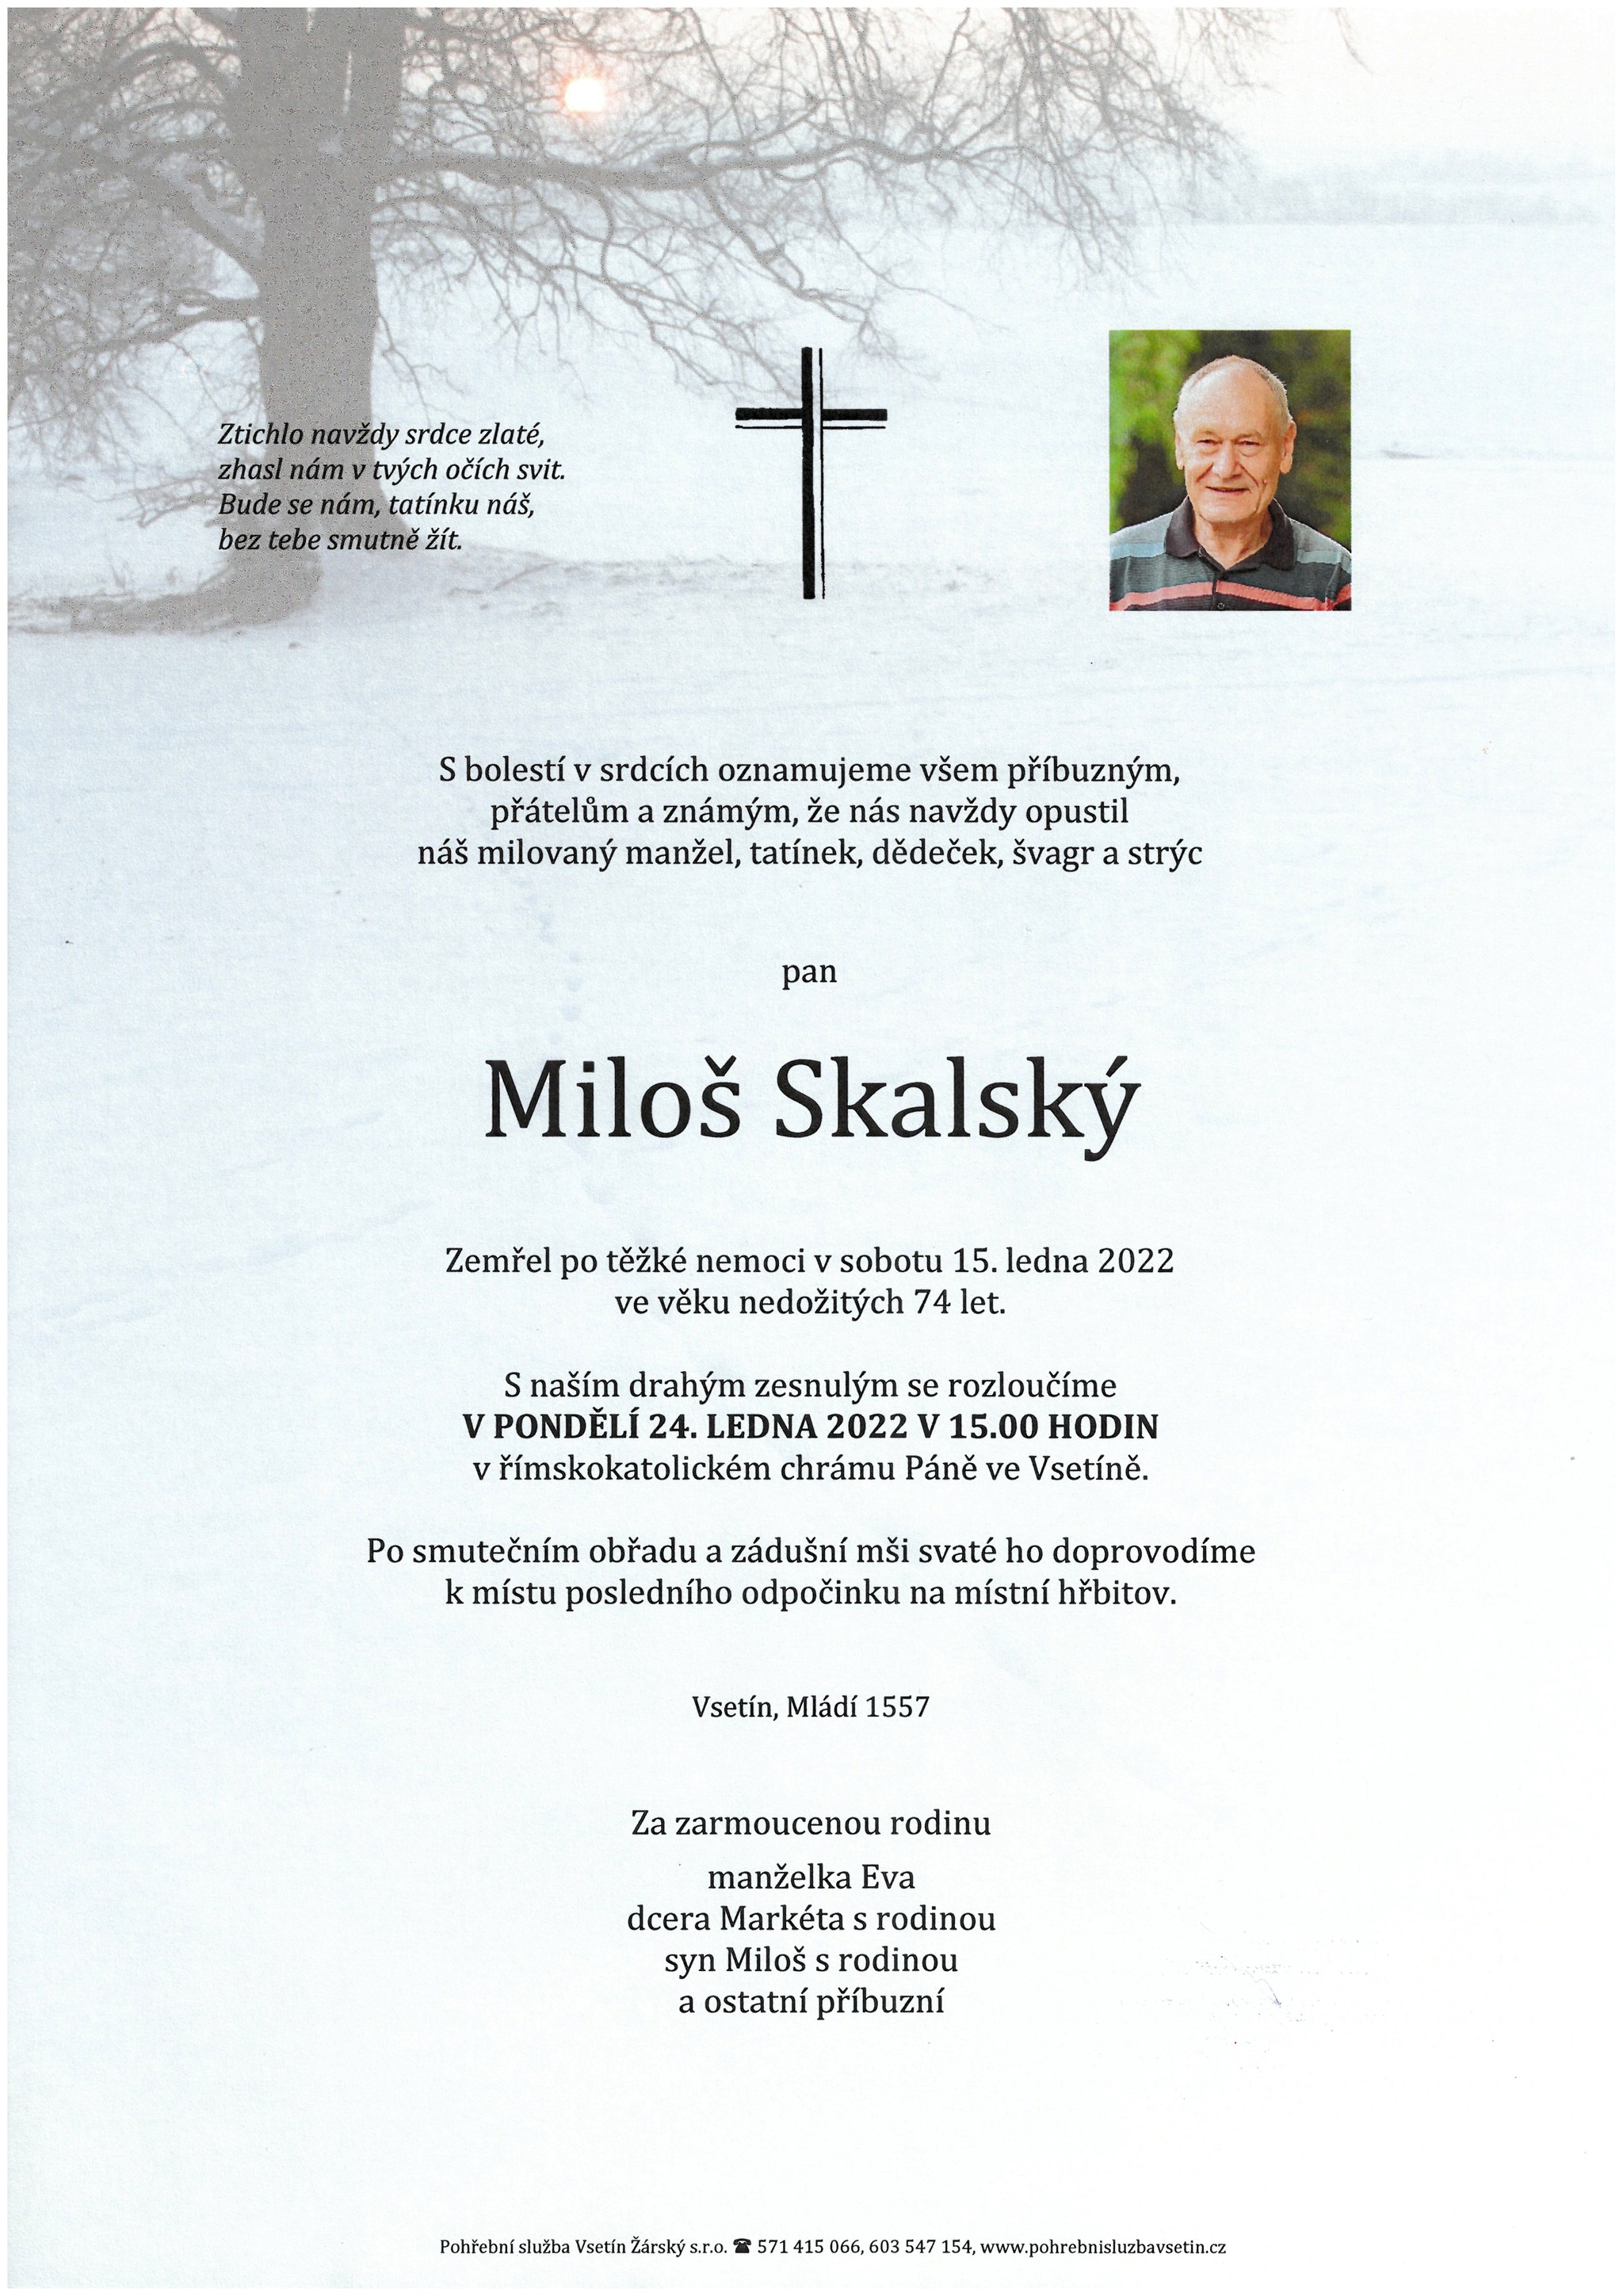 Miloš Skalský